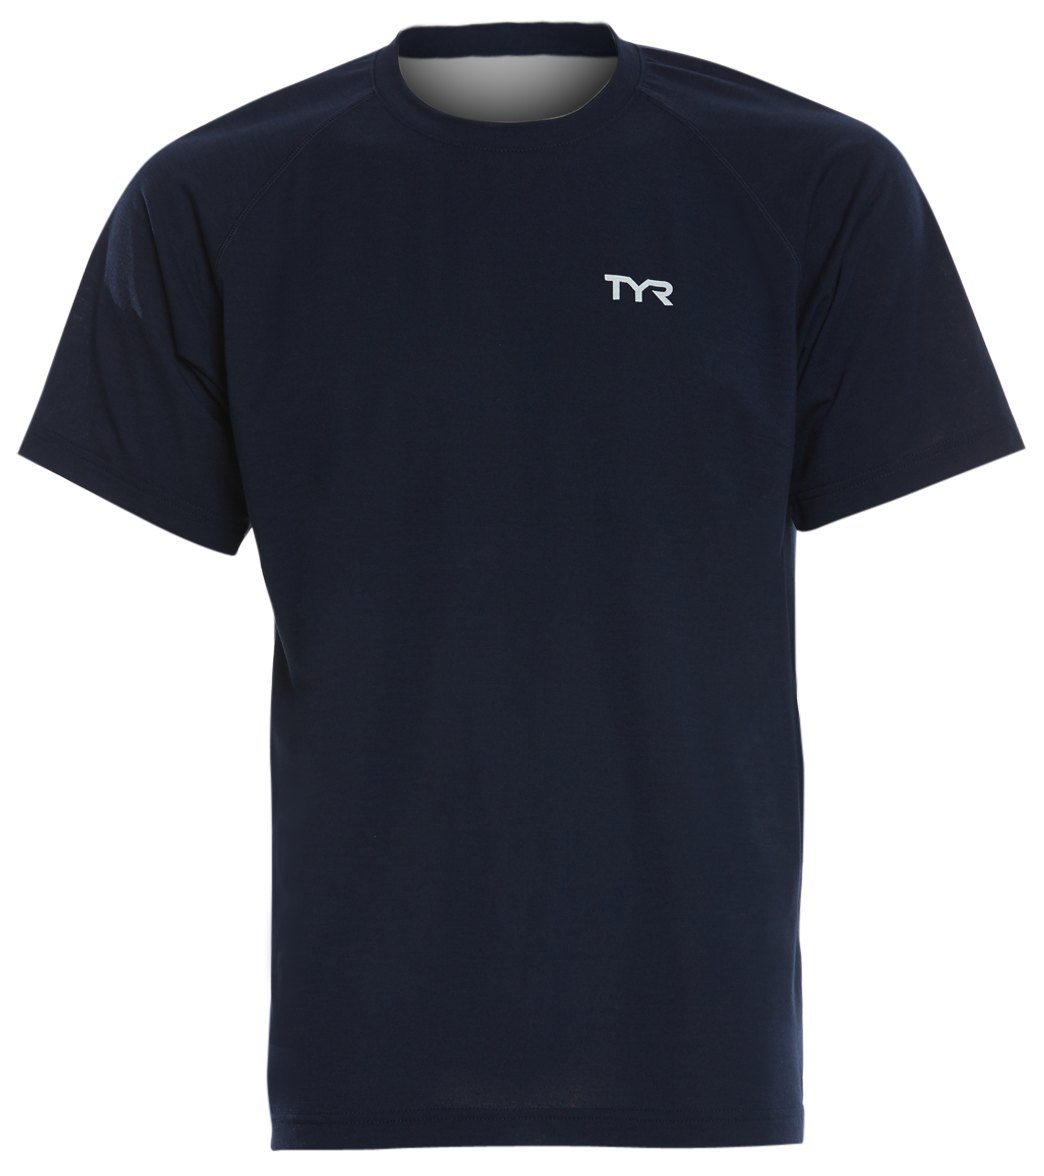 TYR Men's Alliance Tech Tee Shirt - Navy Large Polyester/Spandex - Swimoutlet.com